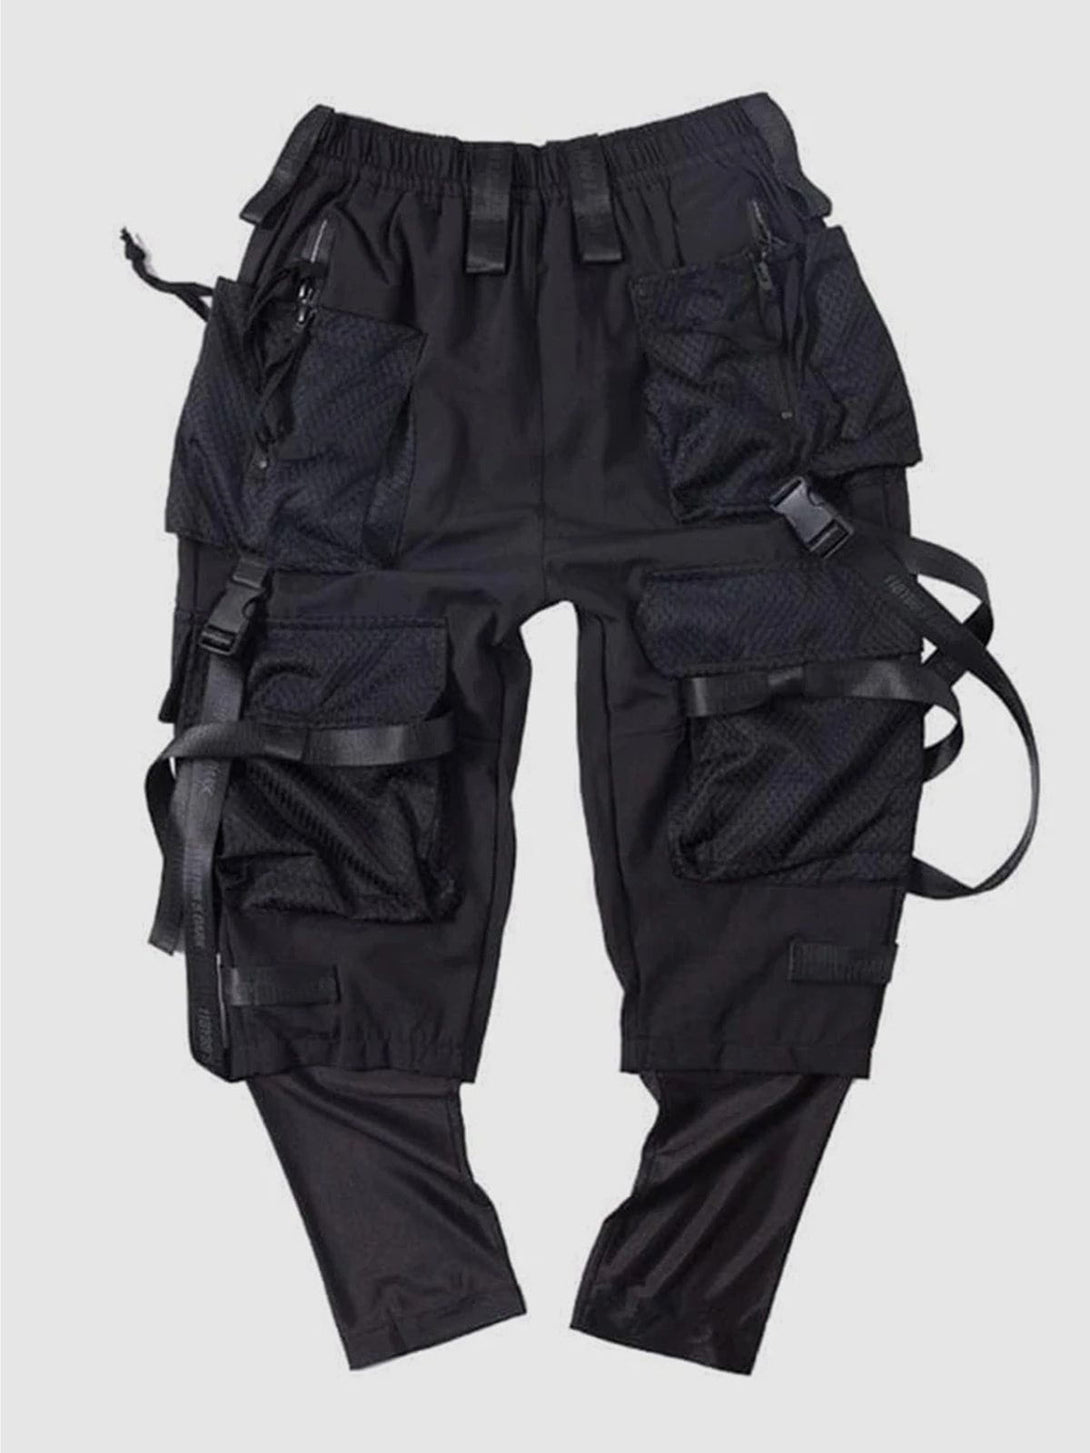 Majesda® - "Ninja" TACTICAL Utility Joggers outfit ideas streetwear fashion